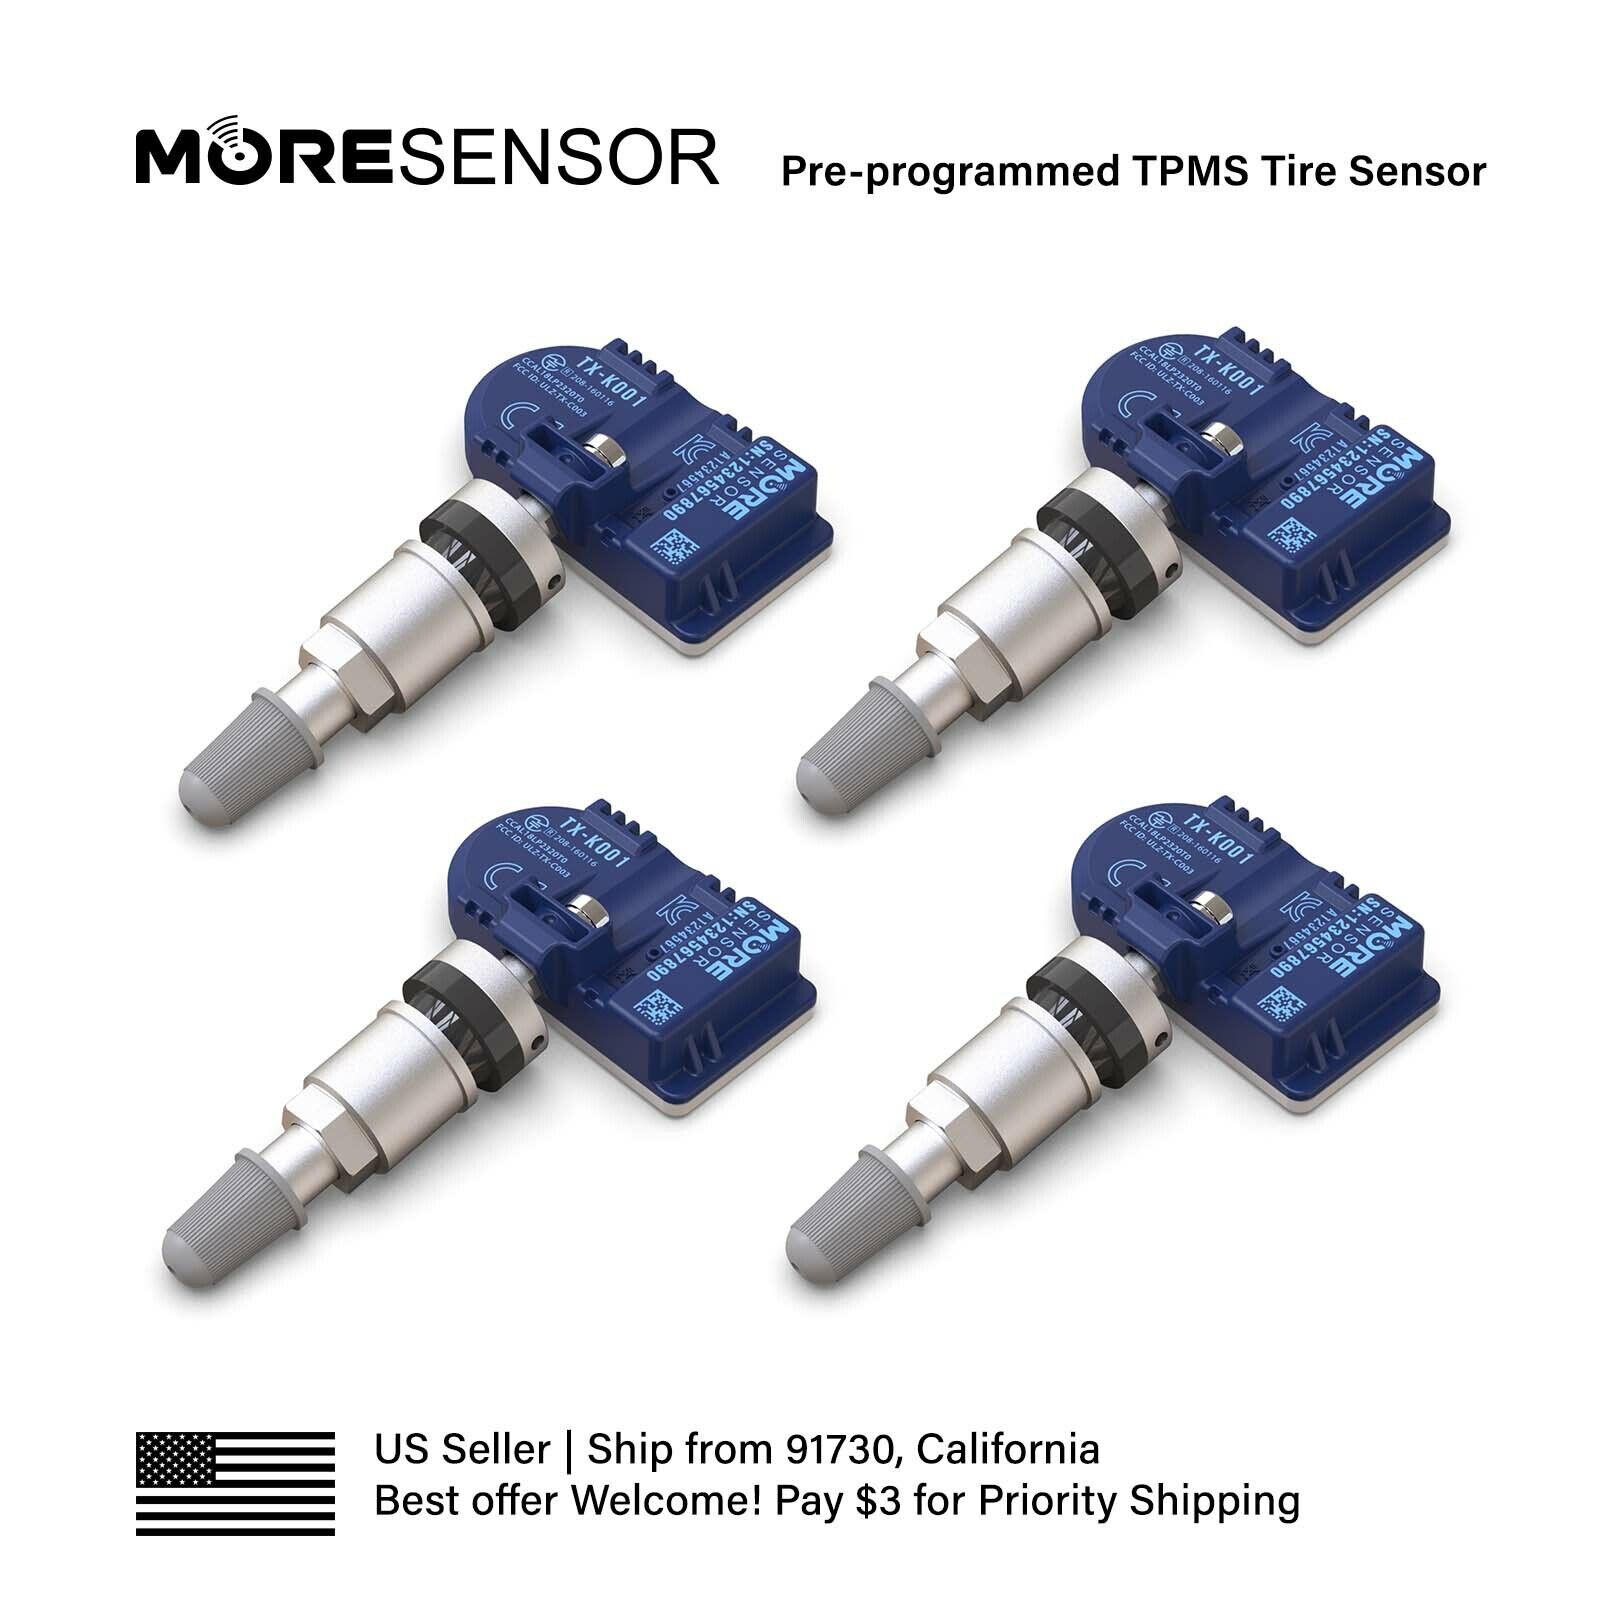 4PC 433MHz MORESENSOR TPMS Clamp-in Tire Sensor for Tesla Model 3 / S / X